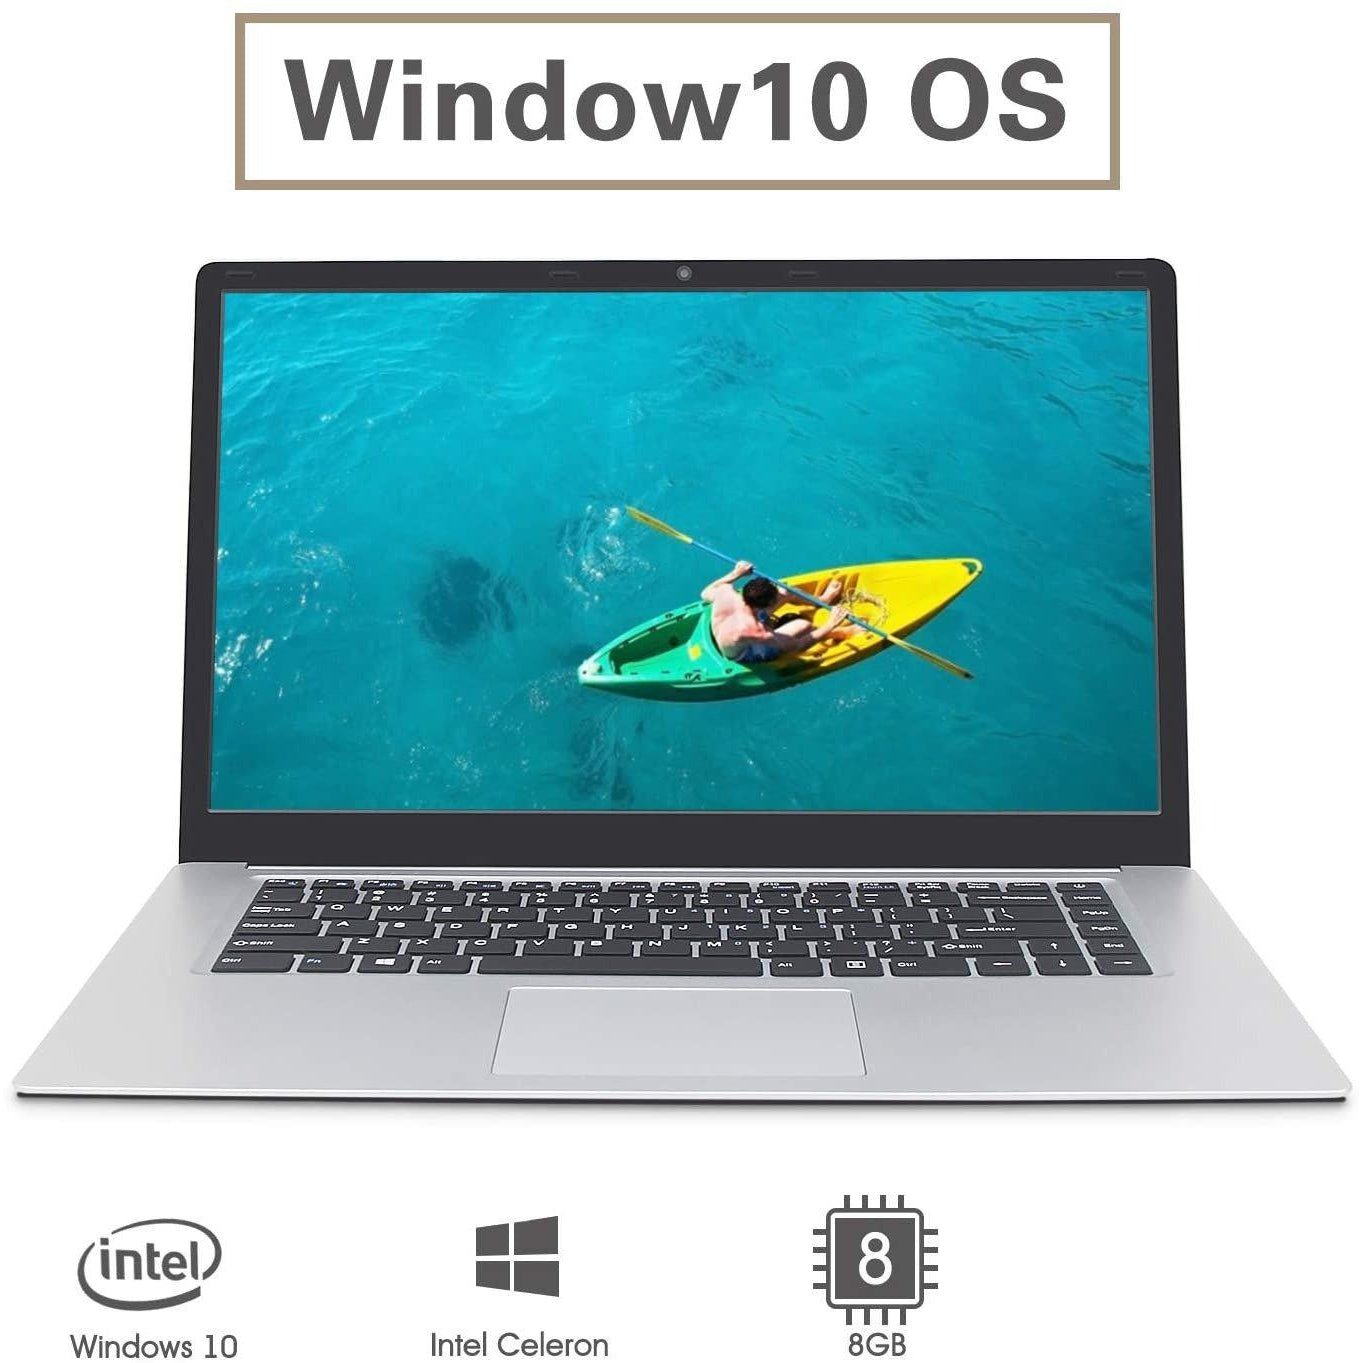 Laptop 15.6-inch 8GB Ram, 128GB / 256GB SSD, Intel Celeron J3455 Quad-core CPU, Windows 10 - Silver